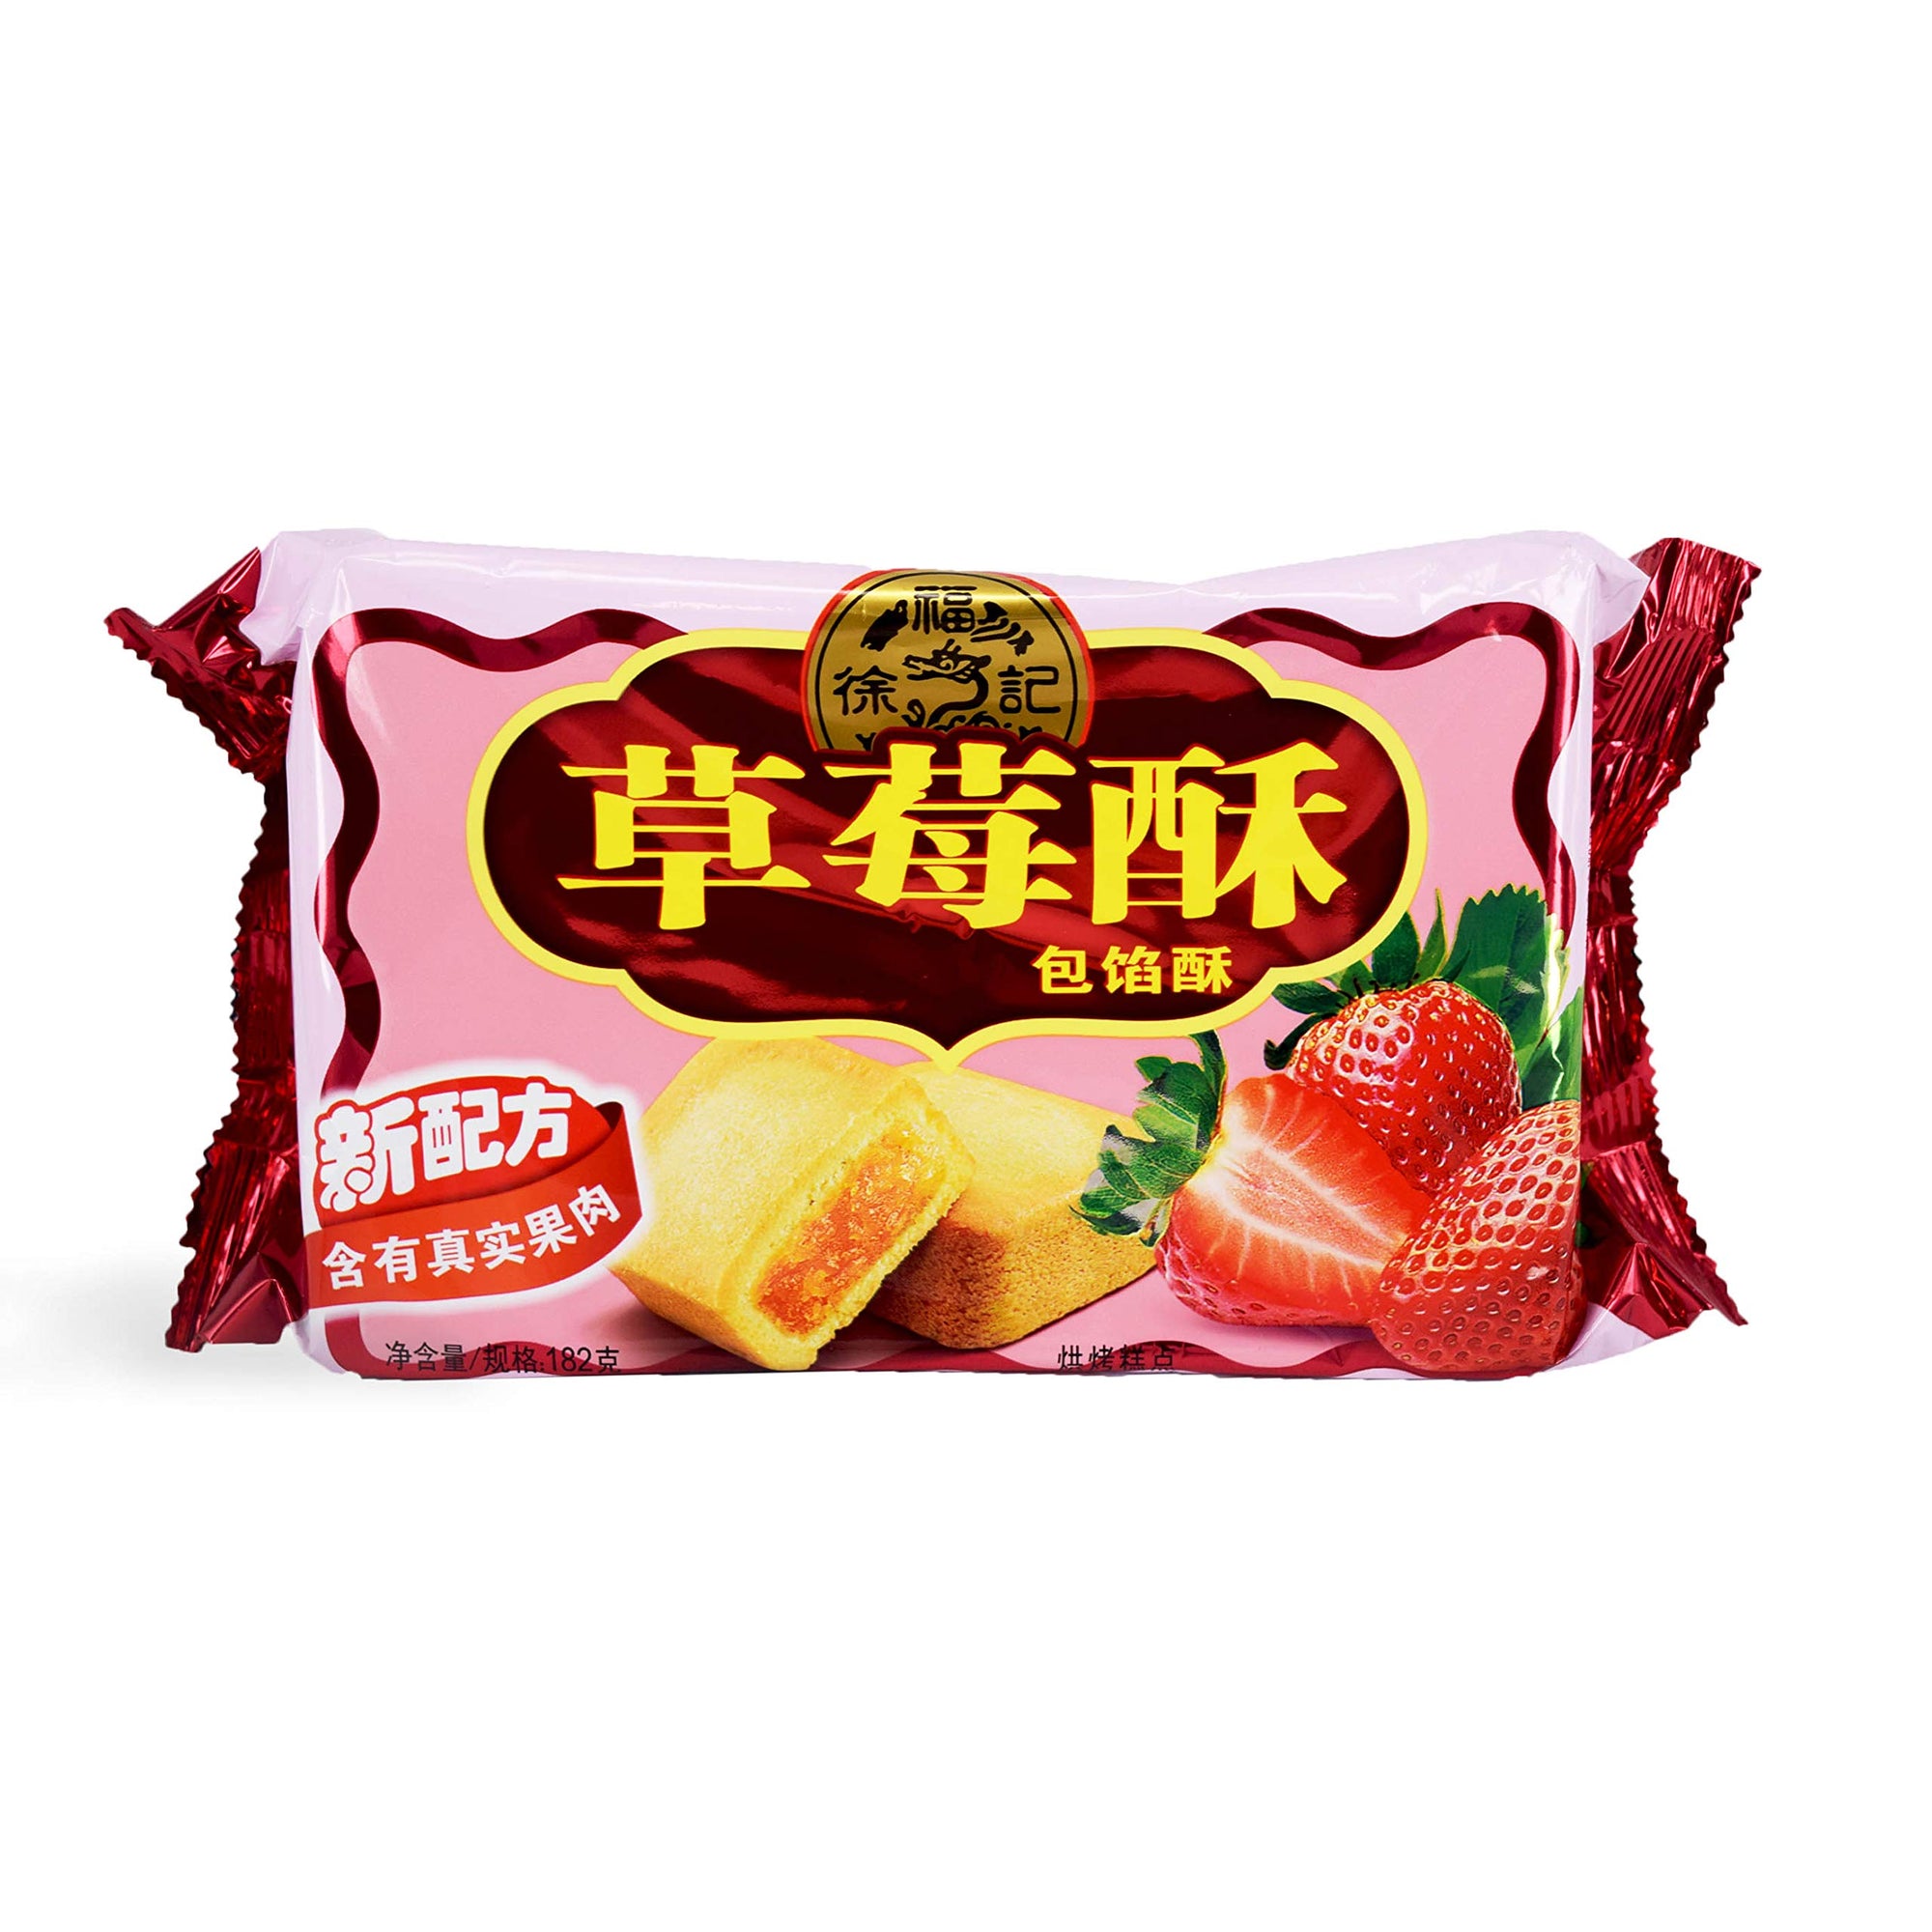 XuFuJi Cookie 徐福记:草莓酥 Strawberry Flavor Cookie 182g (pack of 2)